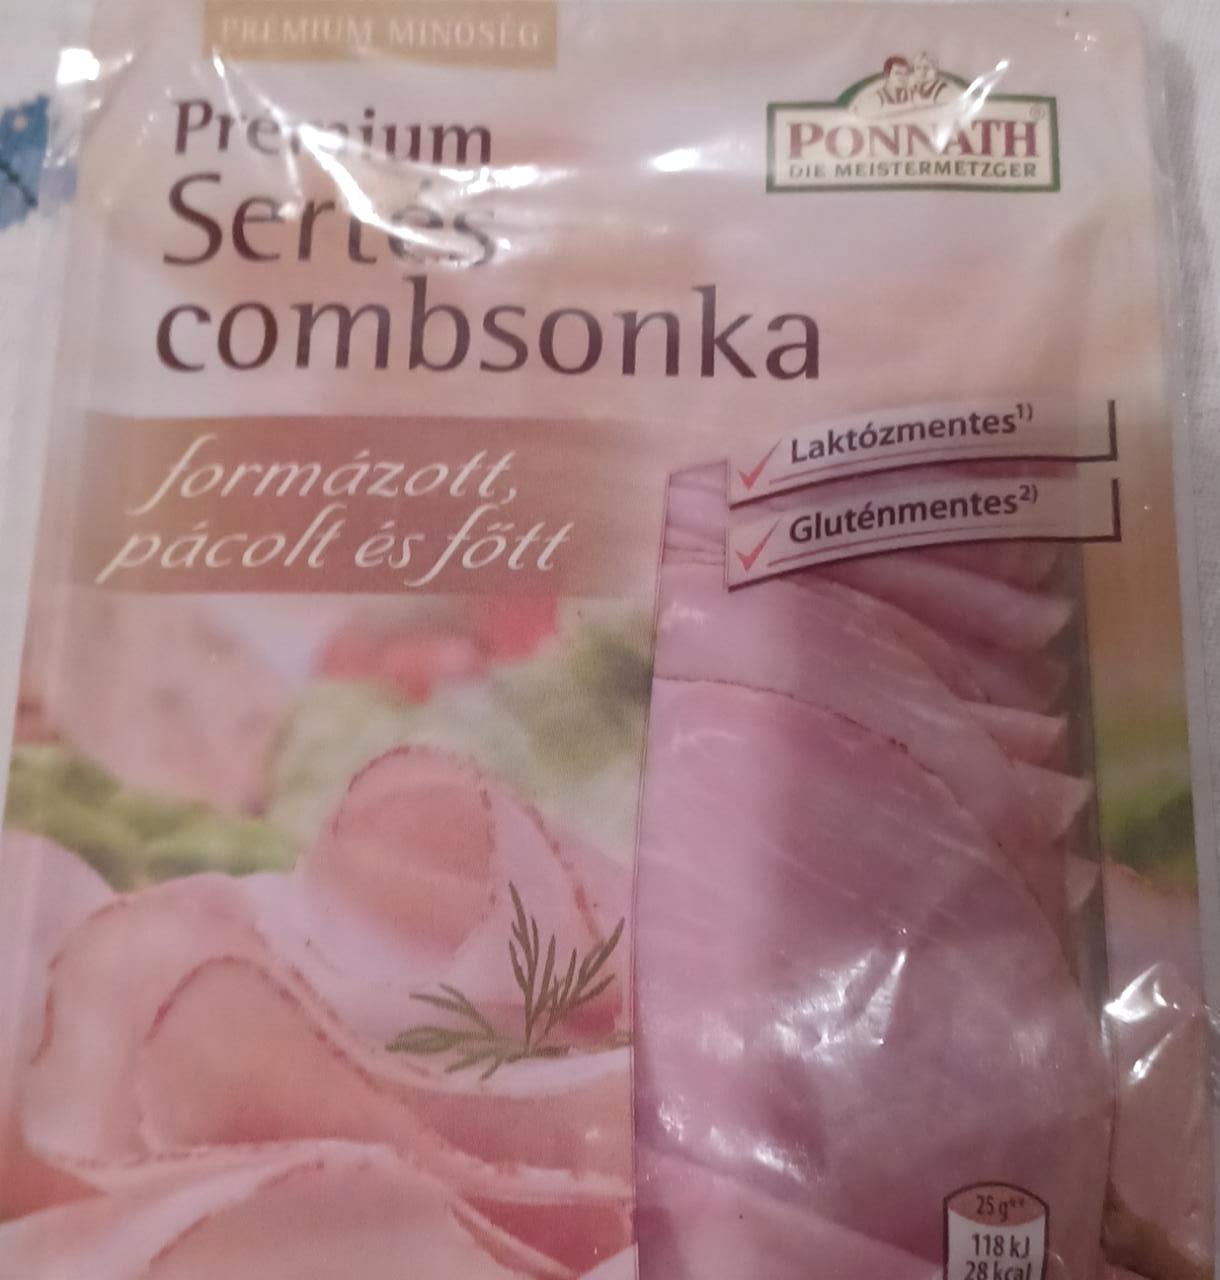 Fotografie - Premium sertés combsonka Ponnath